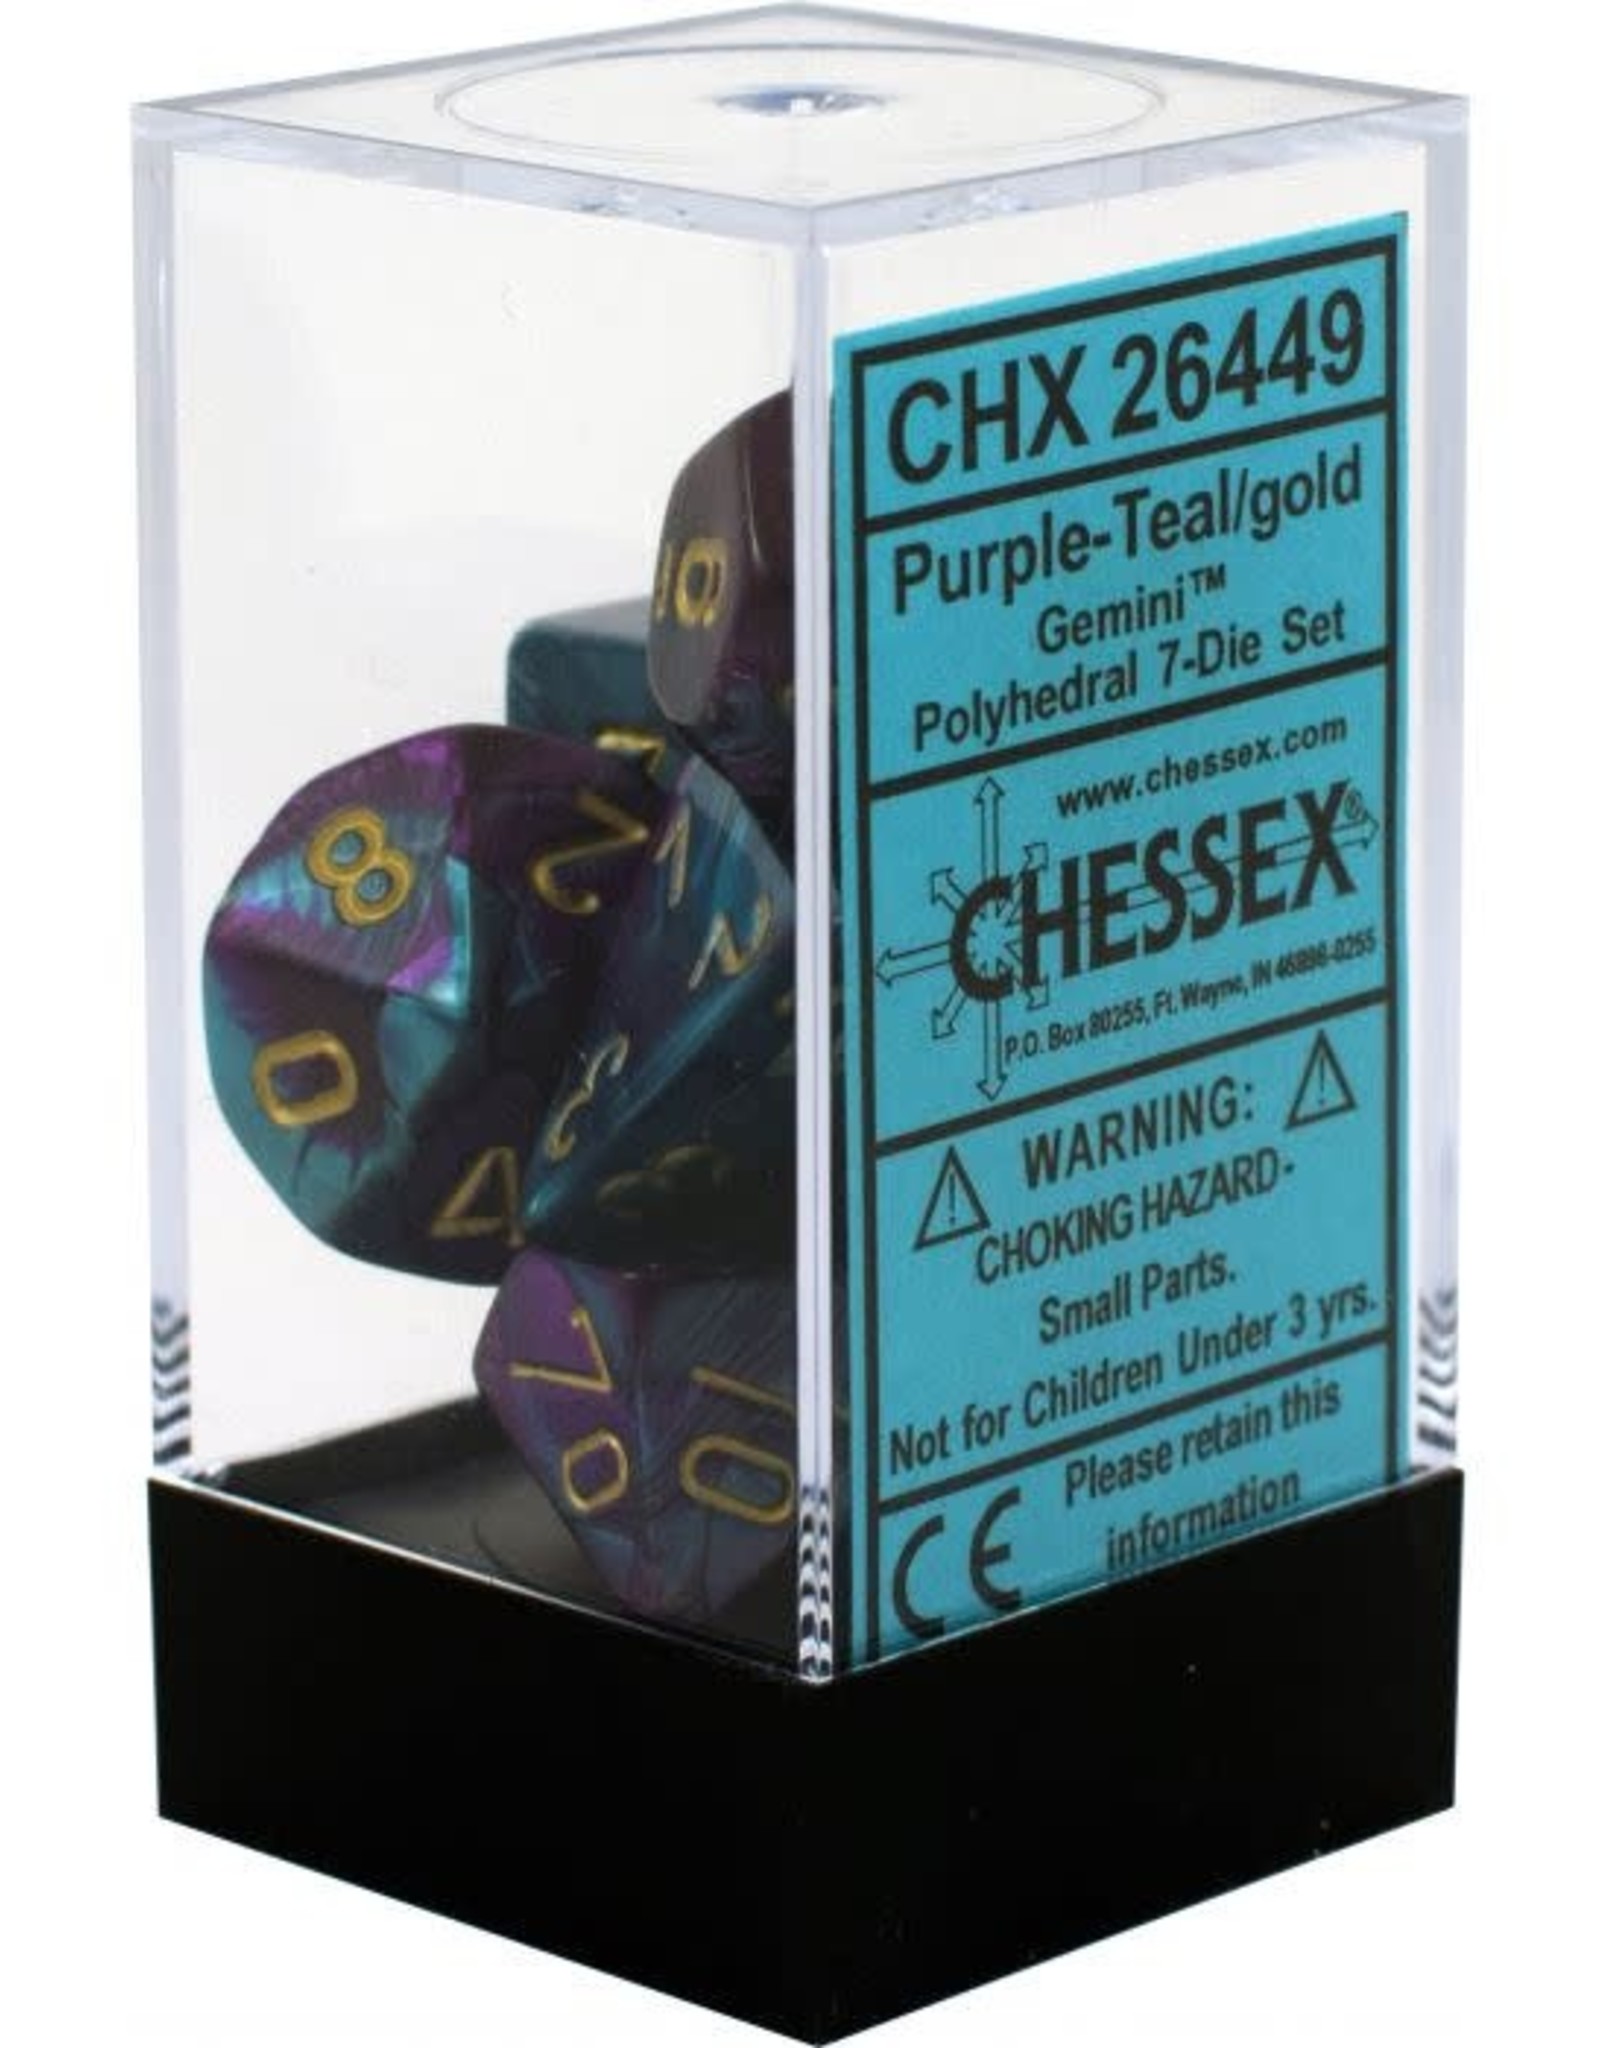 Chessex Gemini - Purple-Teal/Gold Polyhedral Set